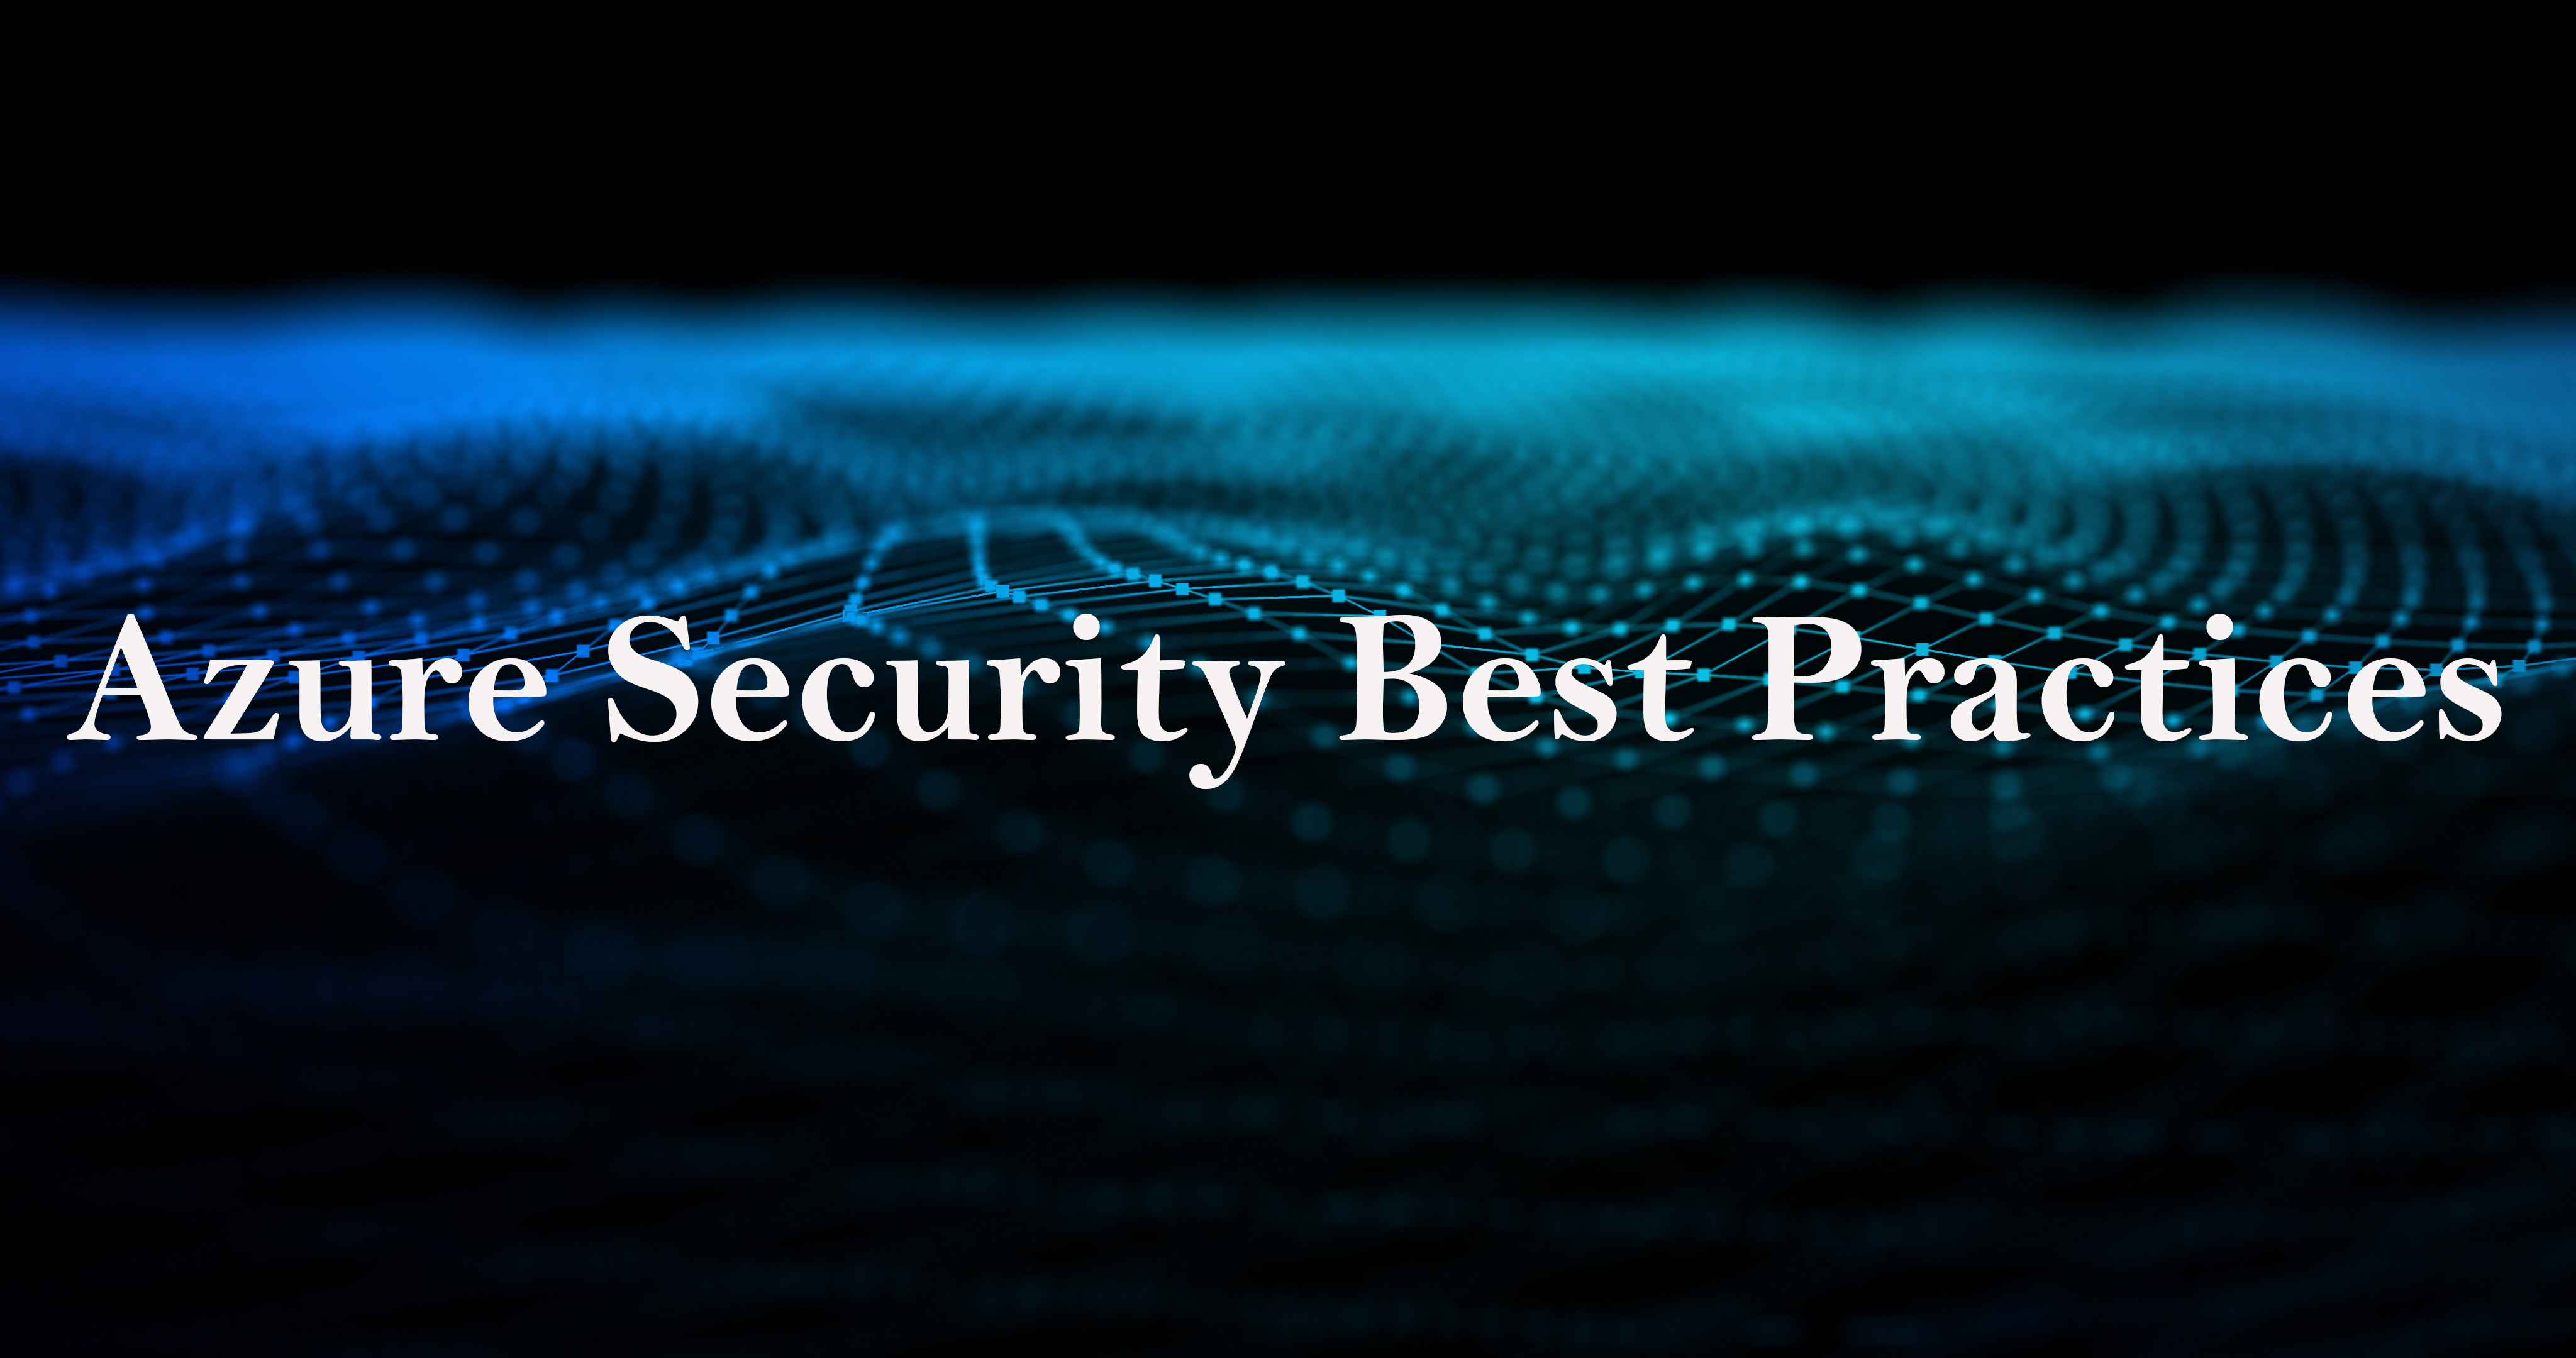 Azure Security Best Practices Blog Image